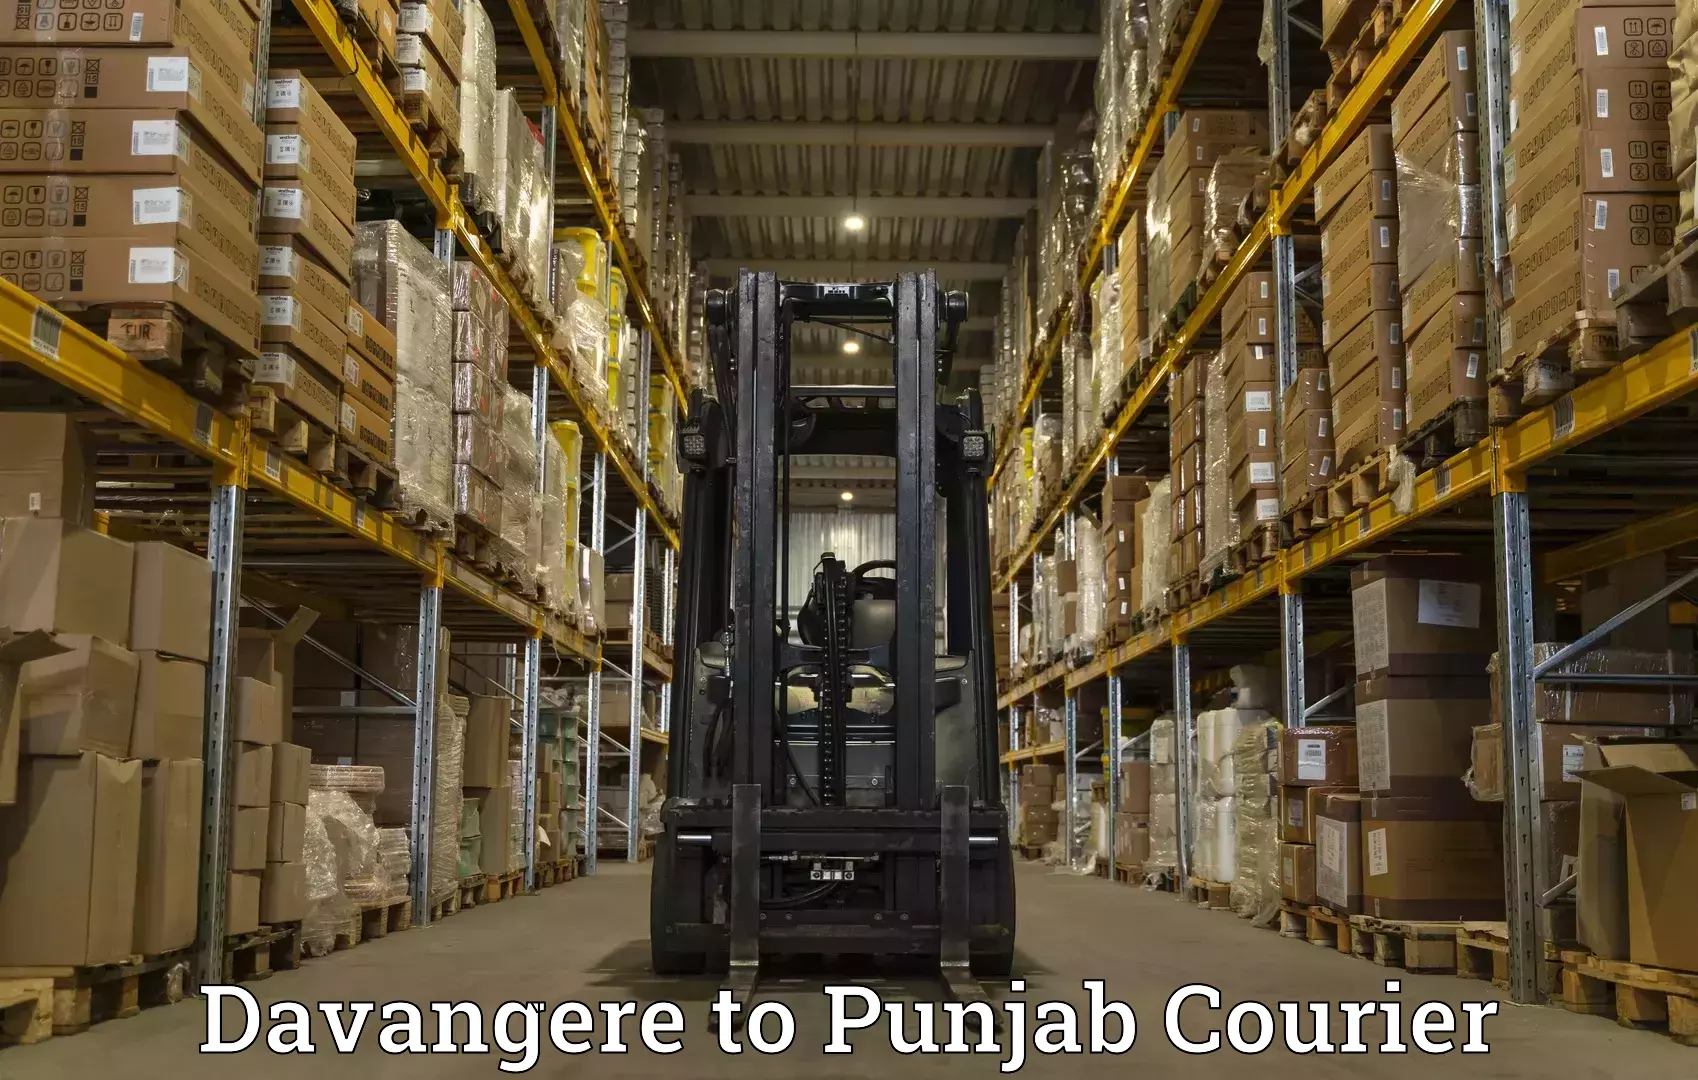 Logistics service provider Davangere to Punjab